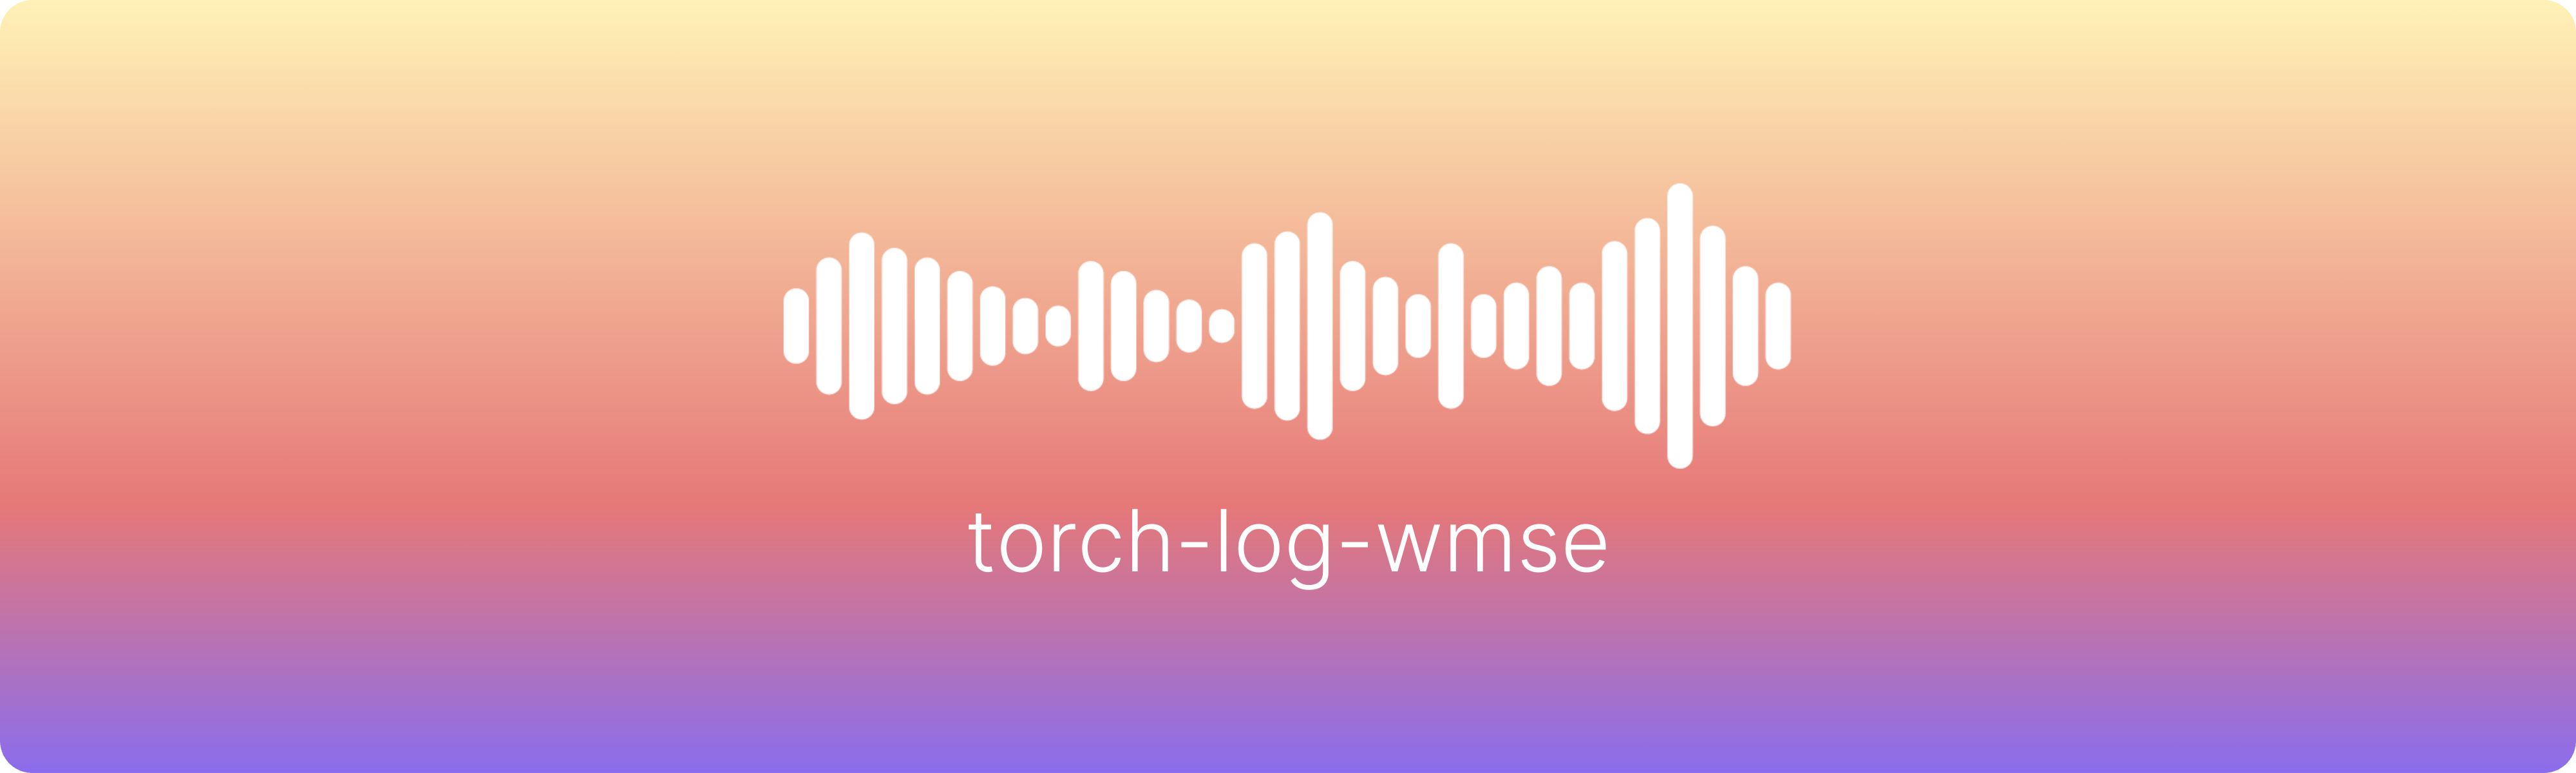 torch-log-wmse-audio-quality-logo